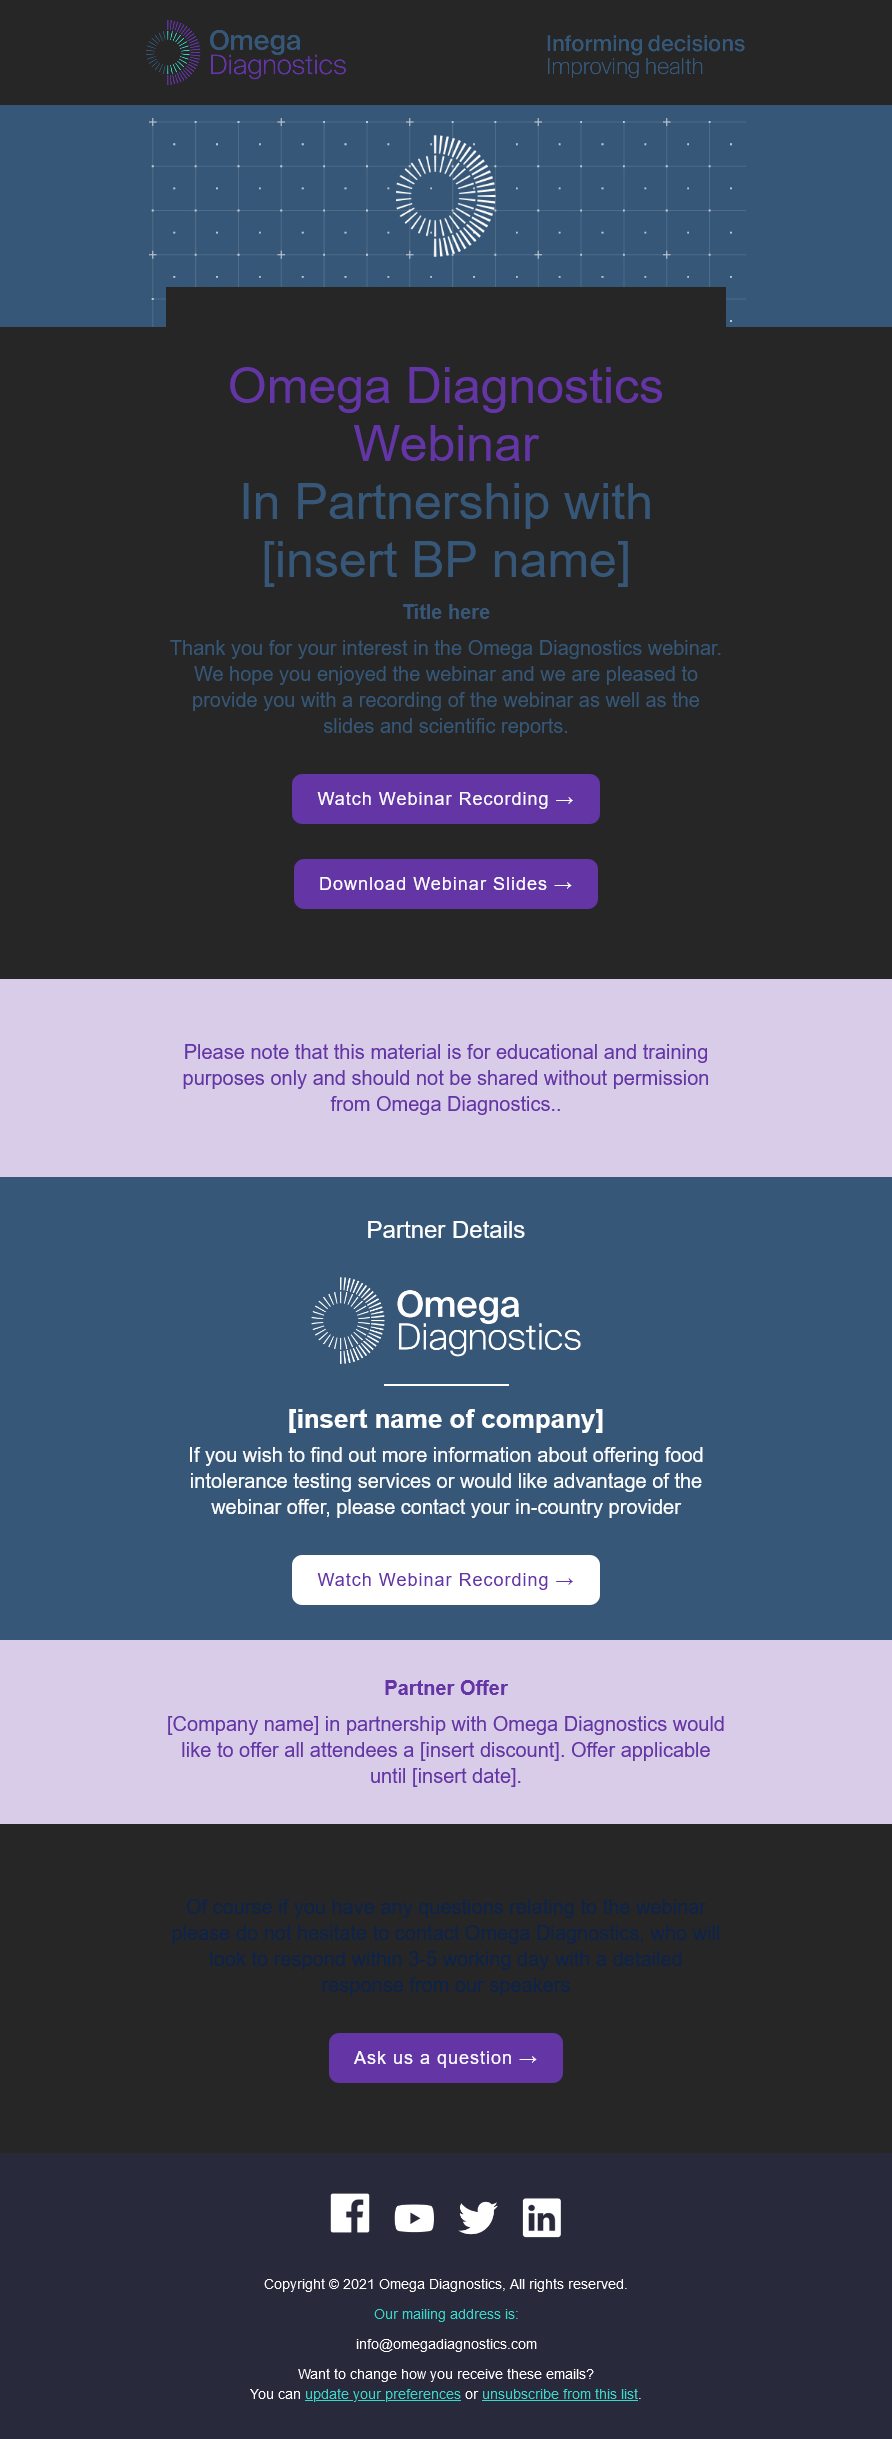 Email Templates Created For Omega Diagnostics Marketing Health Dark mode on desktop design